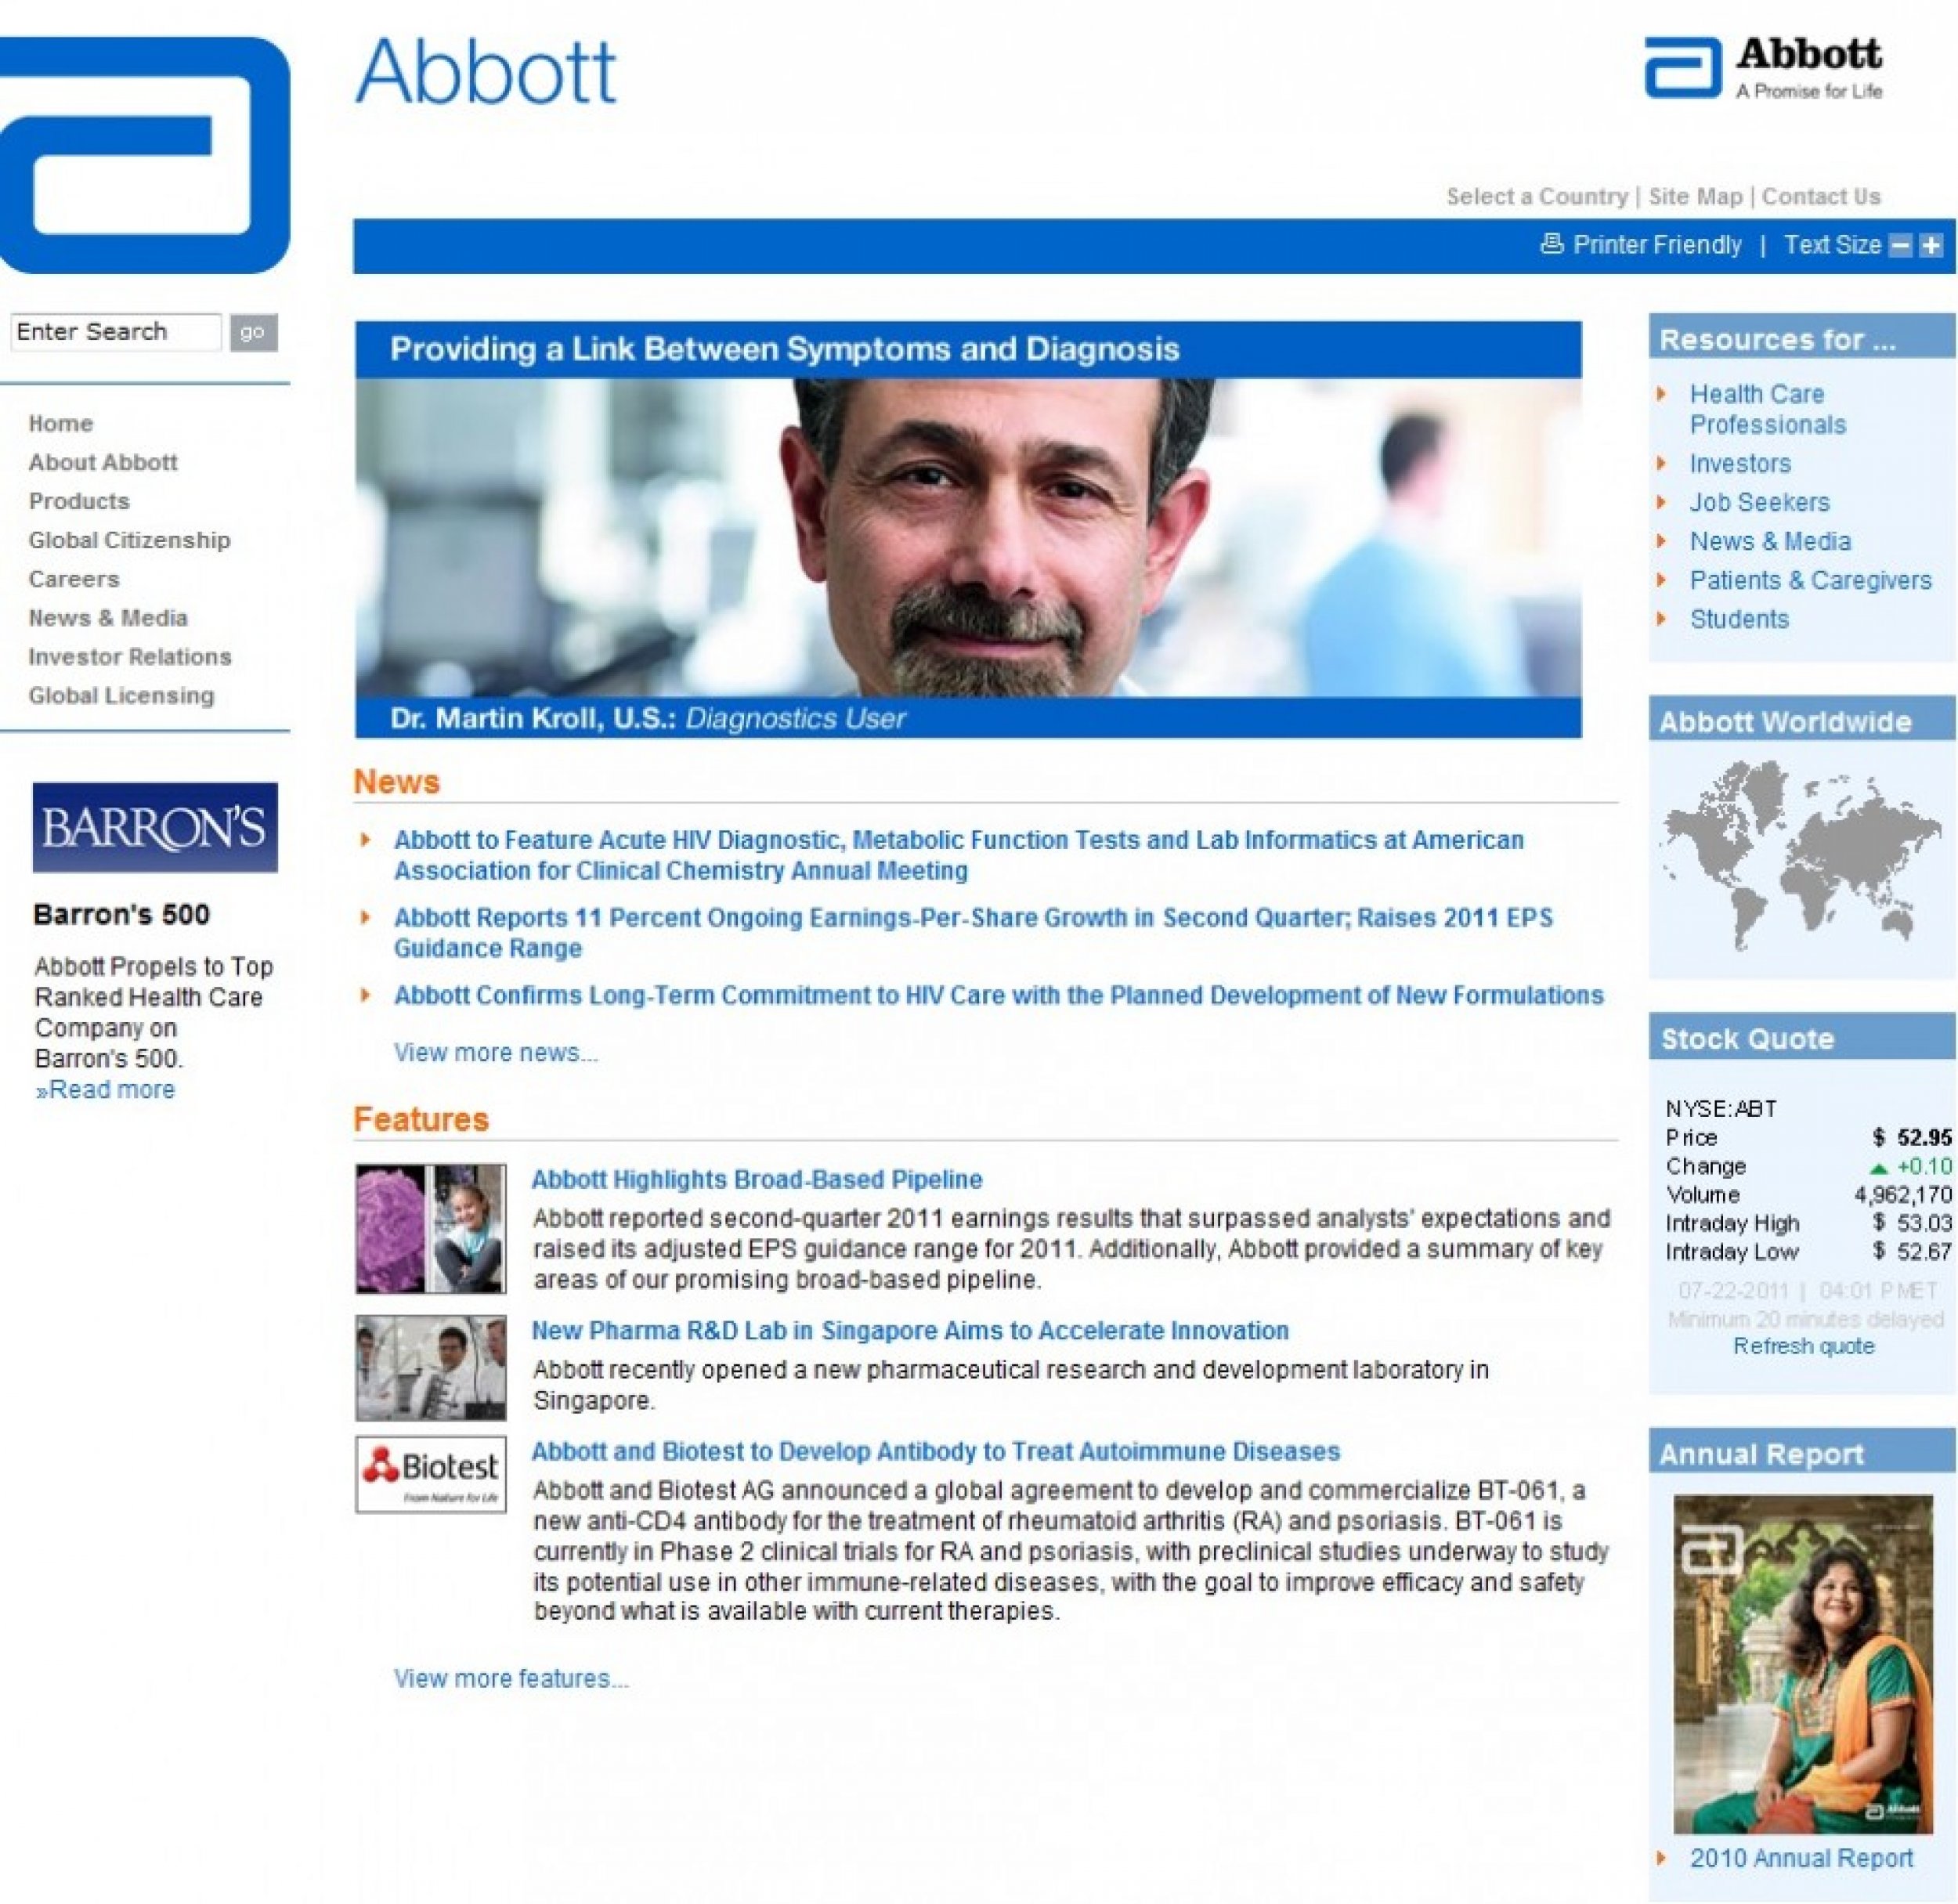 Abbott Laboratories